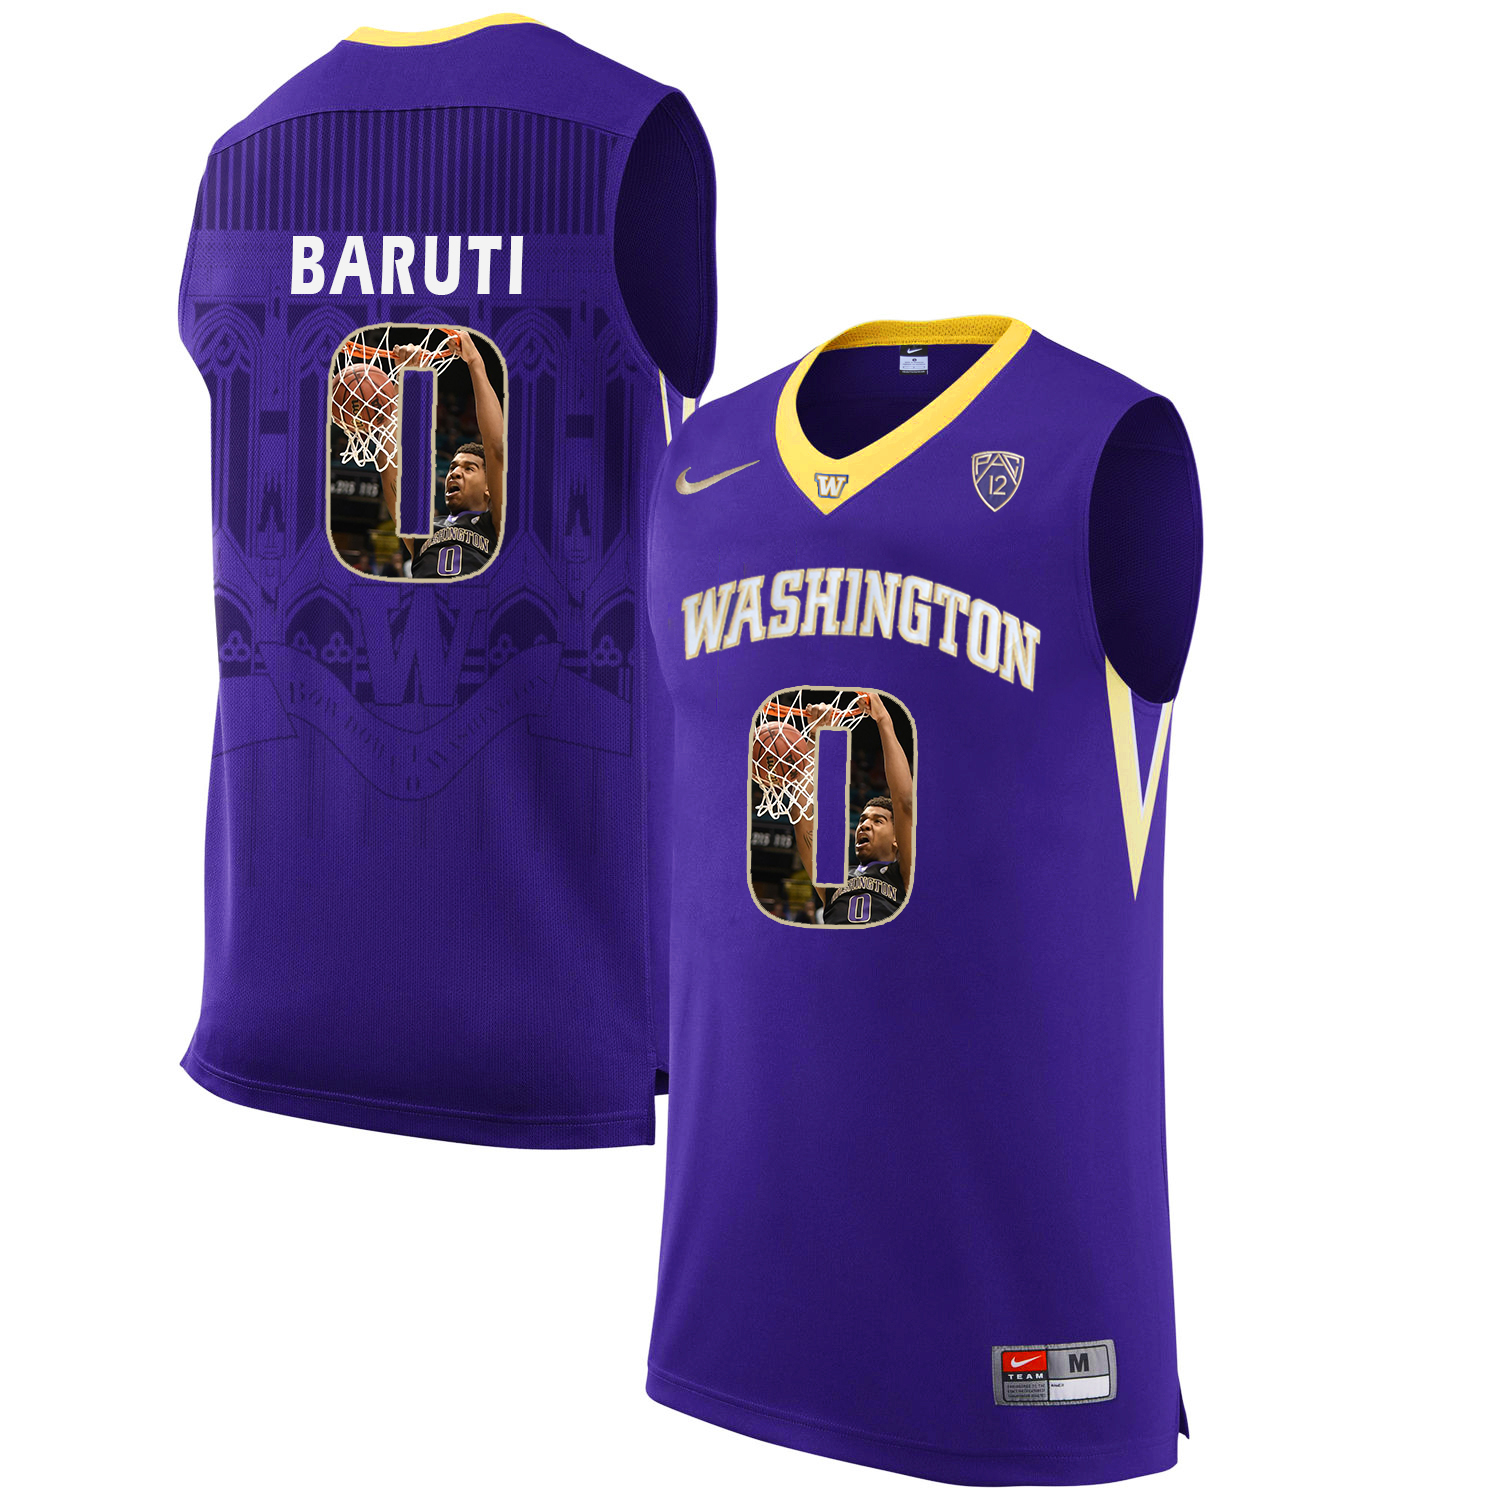 Washington Huskies 0 Bitumba Baruti Purple With Portait College Basketball Jersey